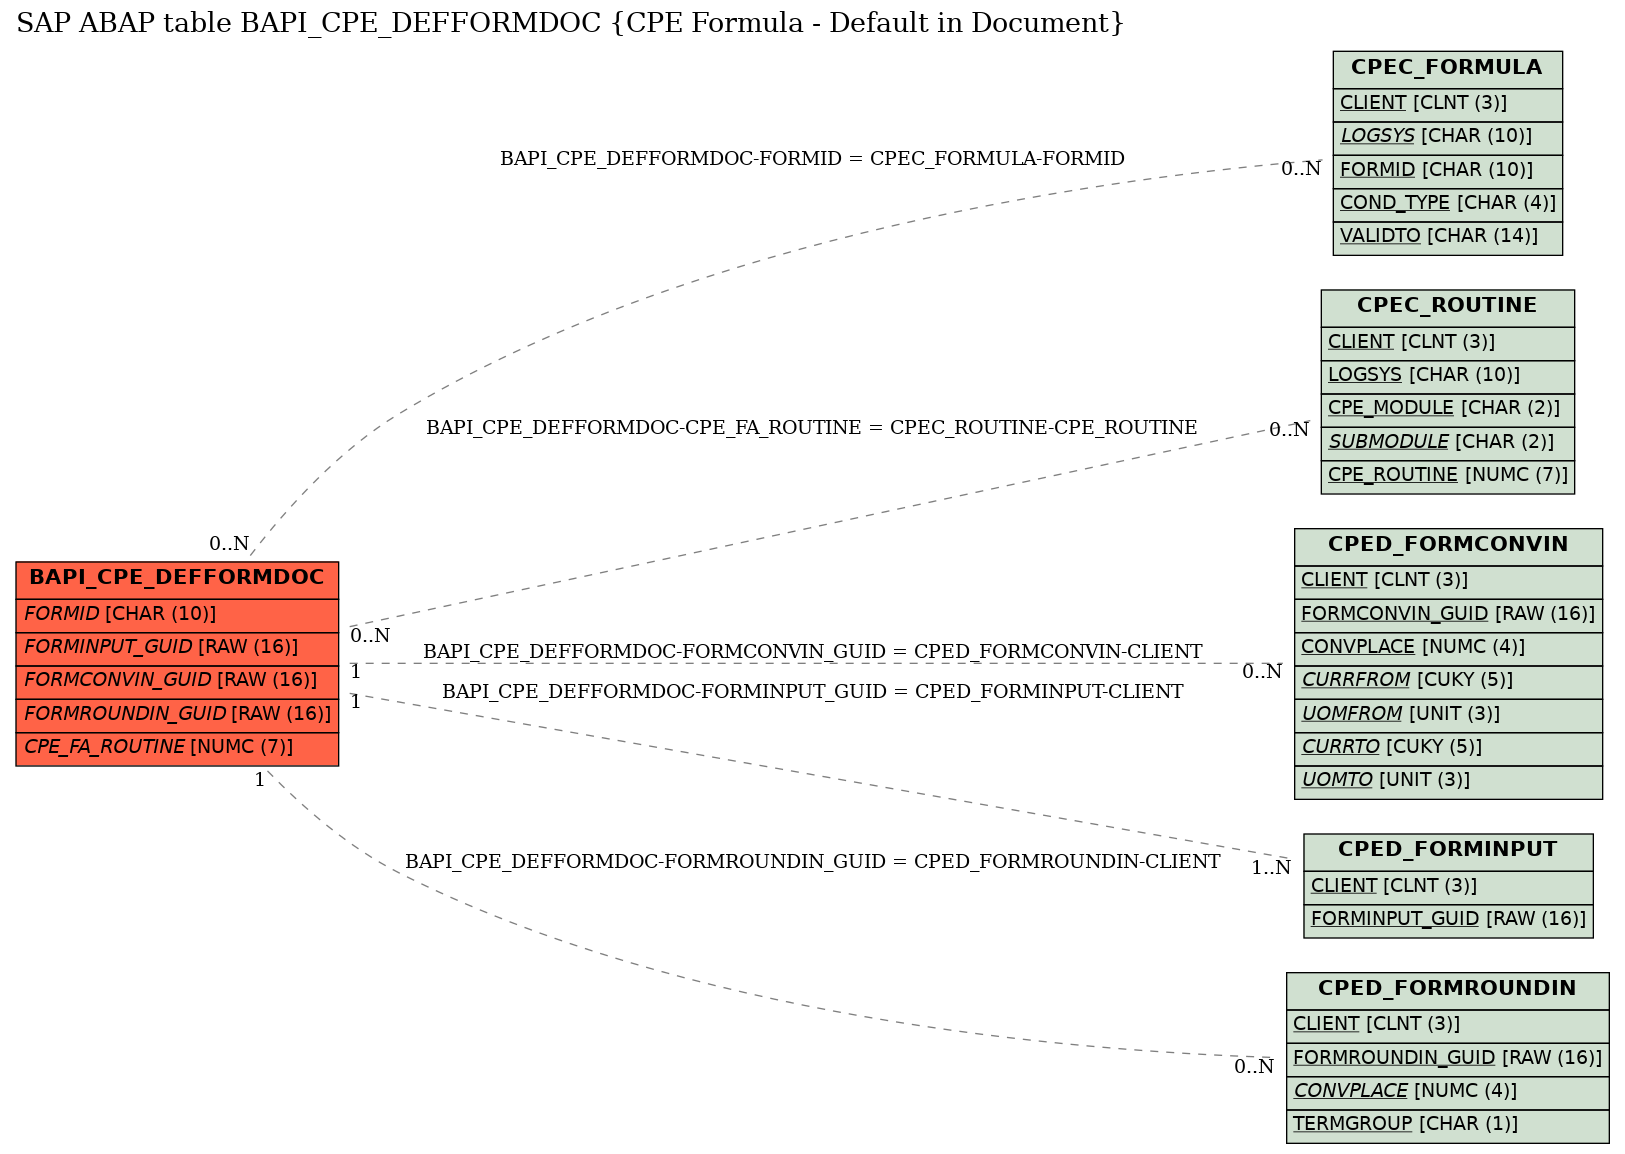 E-R Diagram for table BAPI_CPE_DEFFORMDOC (CPE Formula - Default in Document)